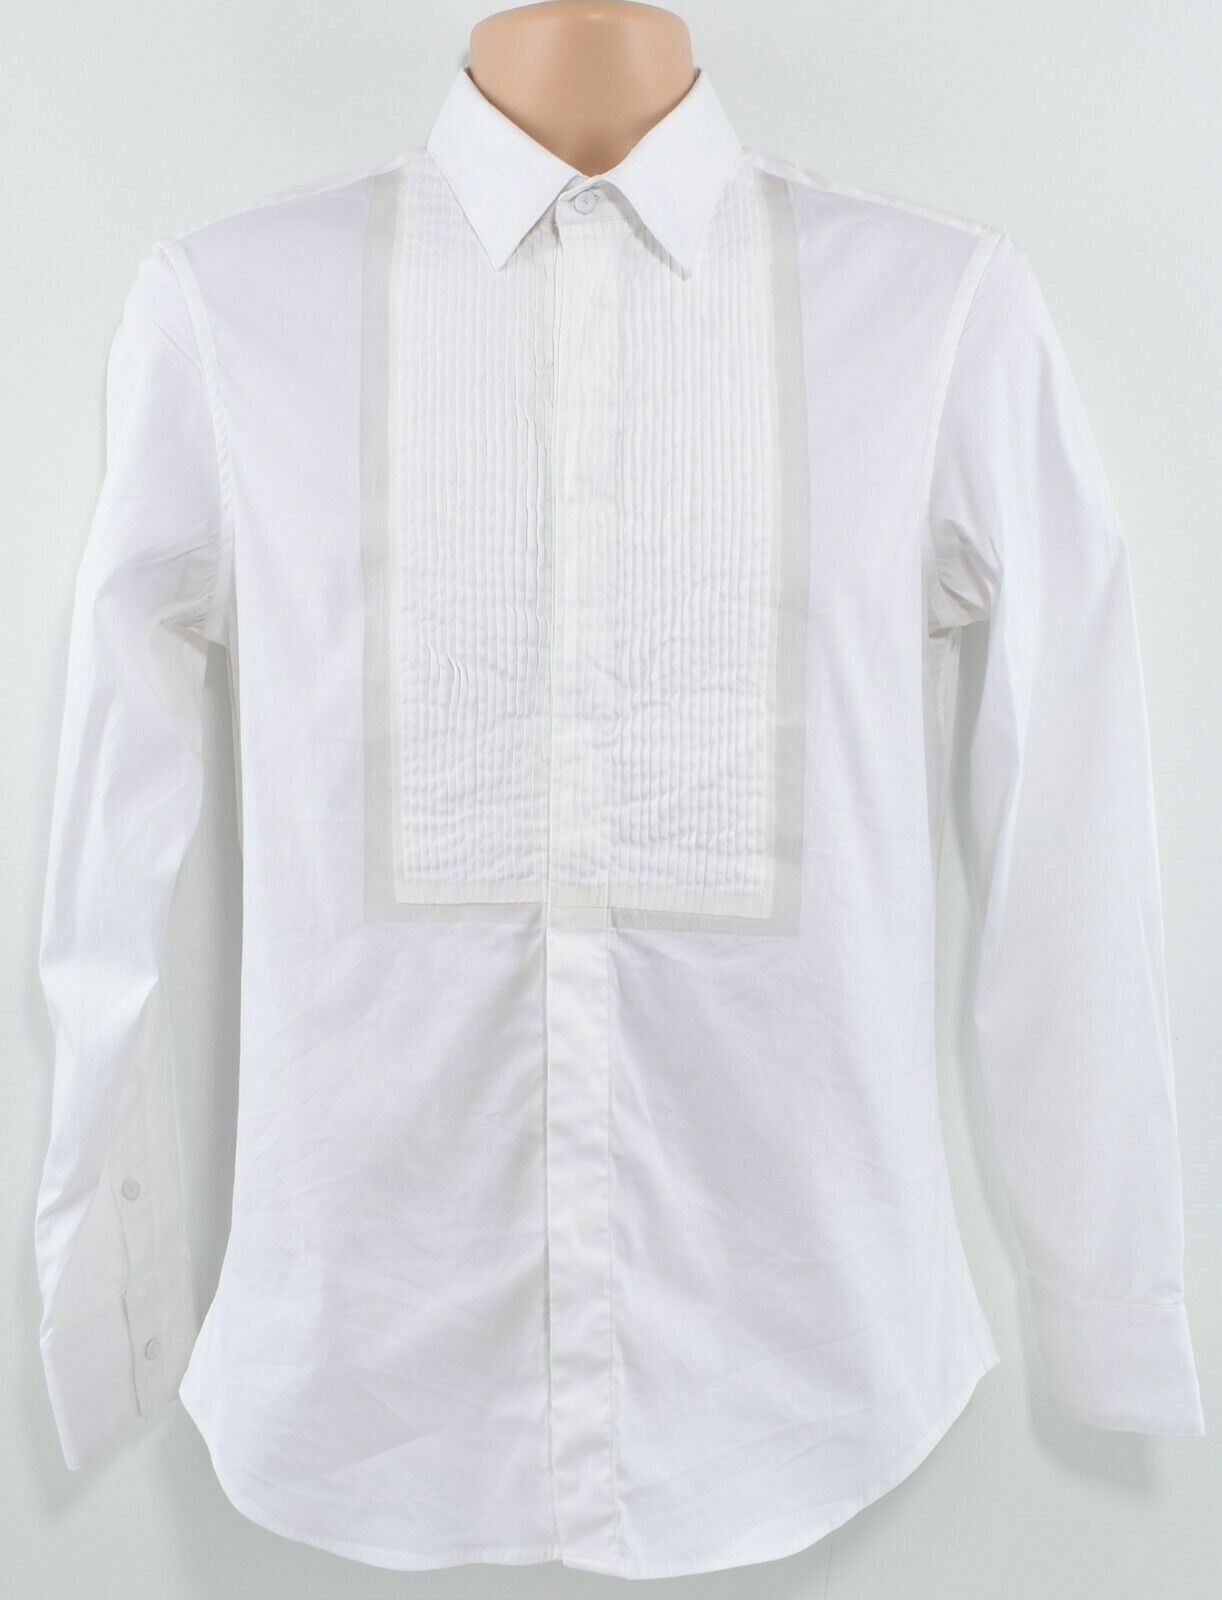 EMPORIO ARMANI Men's Ivory Shirt, Stretch Cotton, size collar 15.5" chest 39"